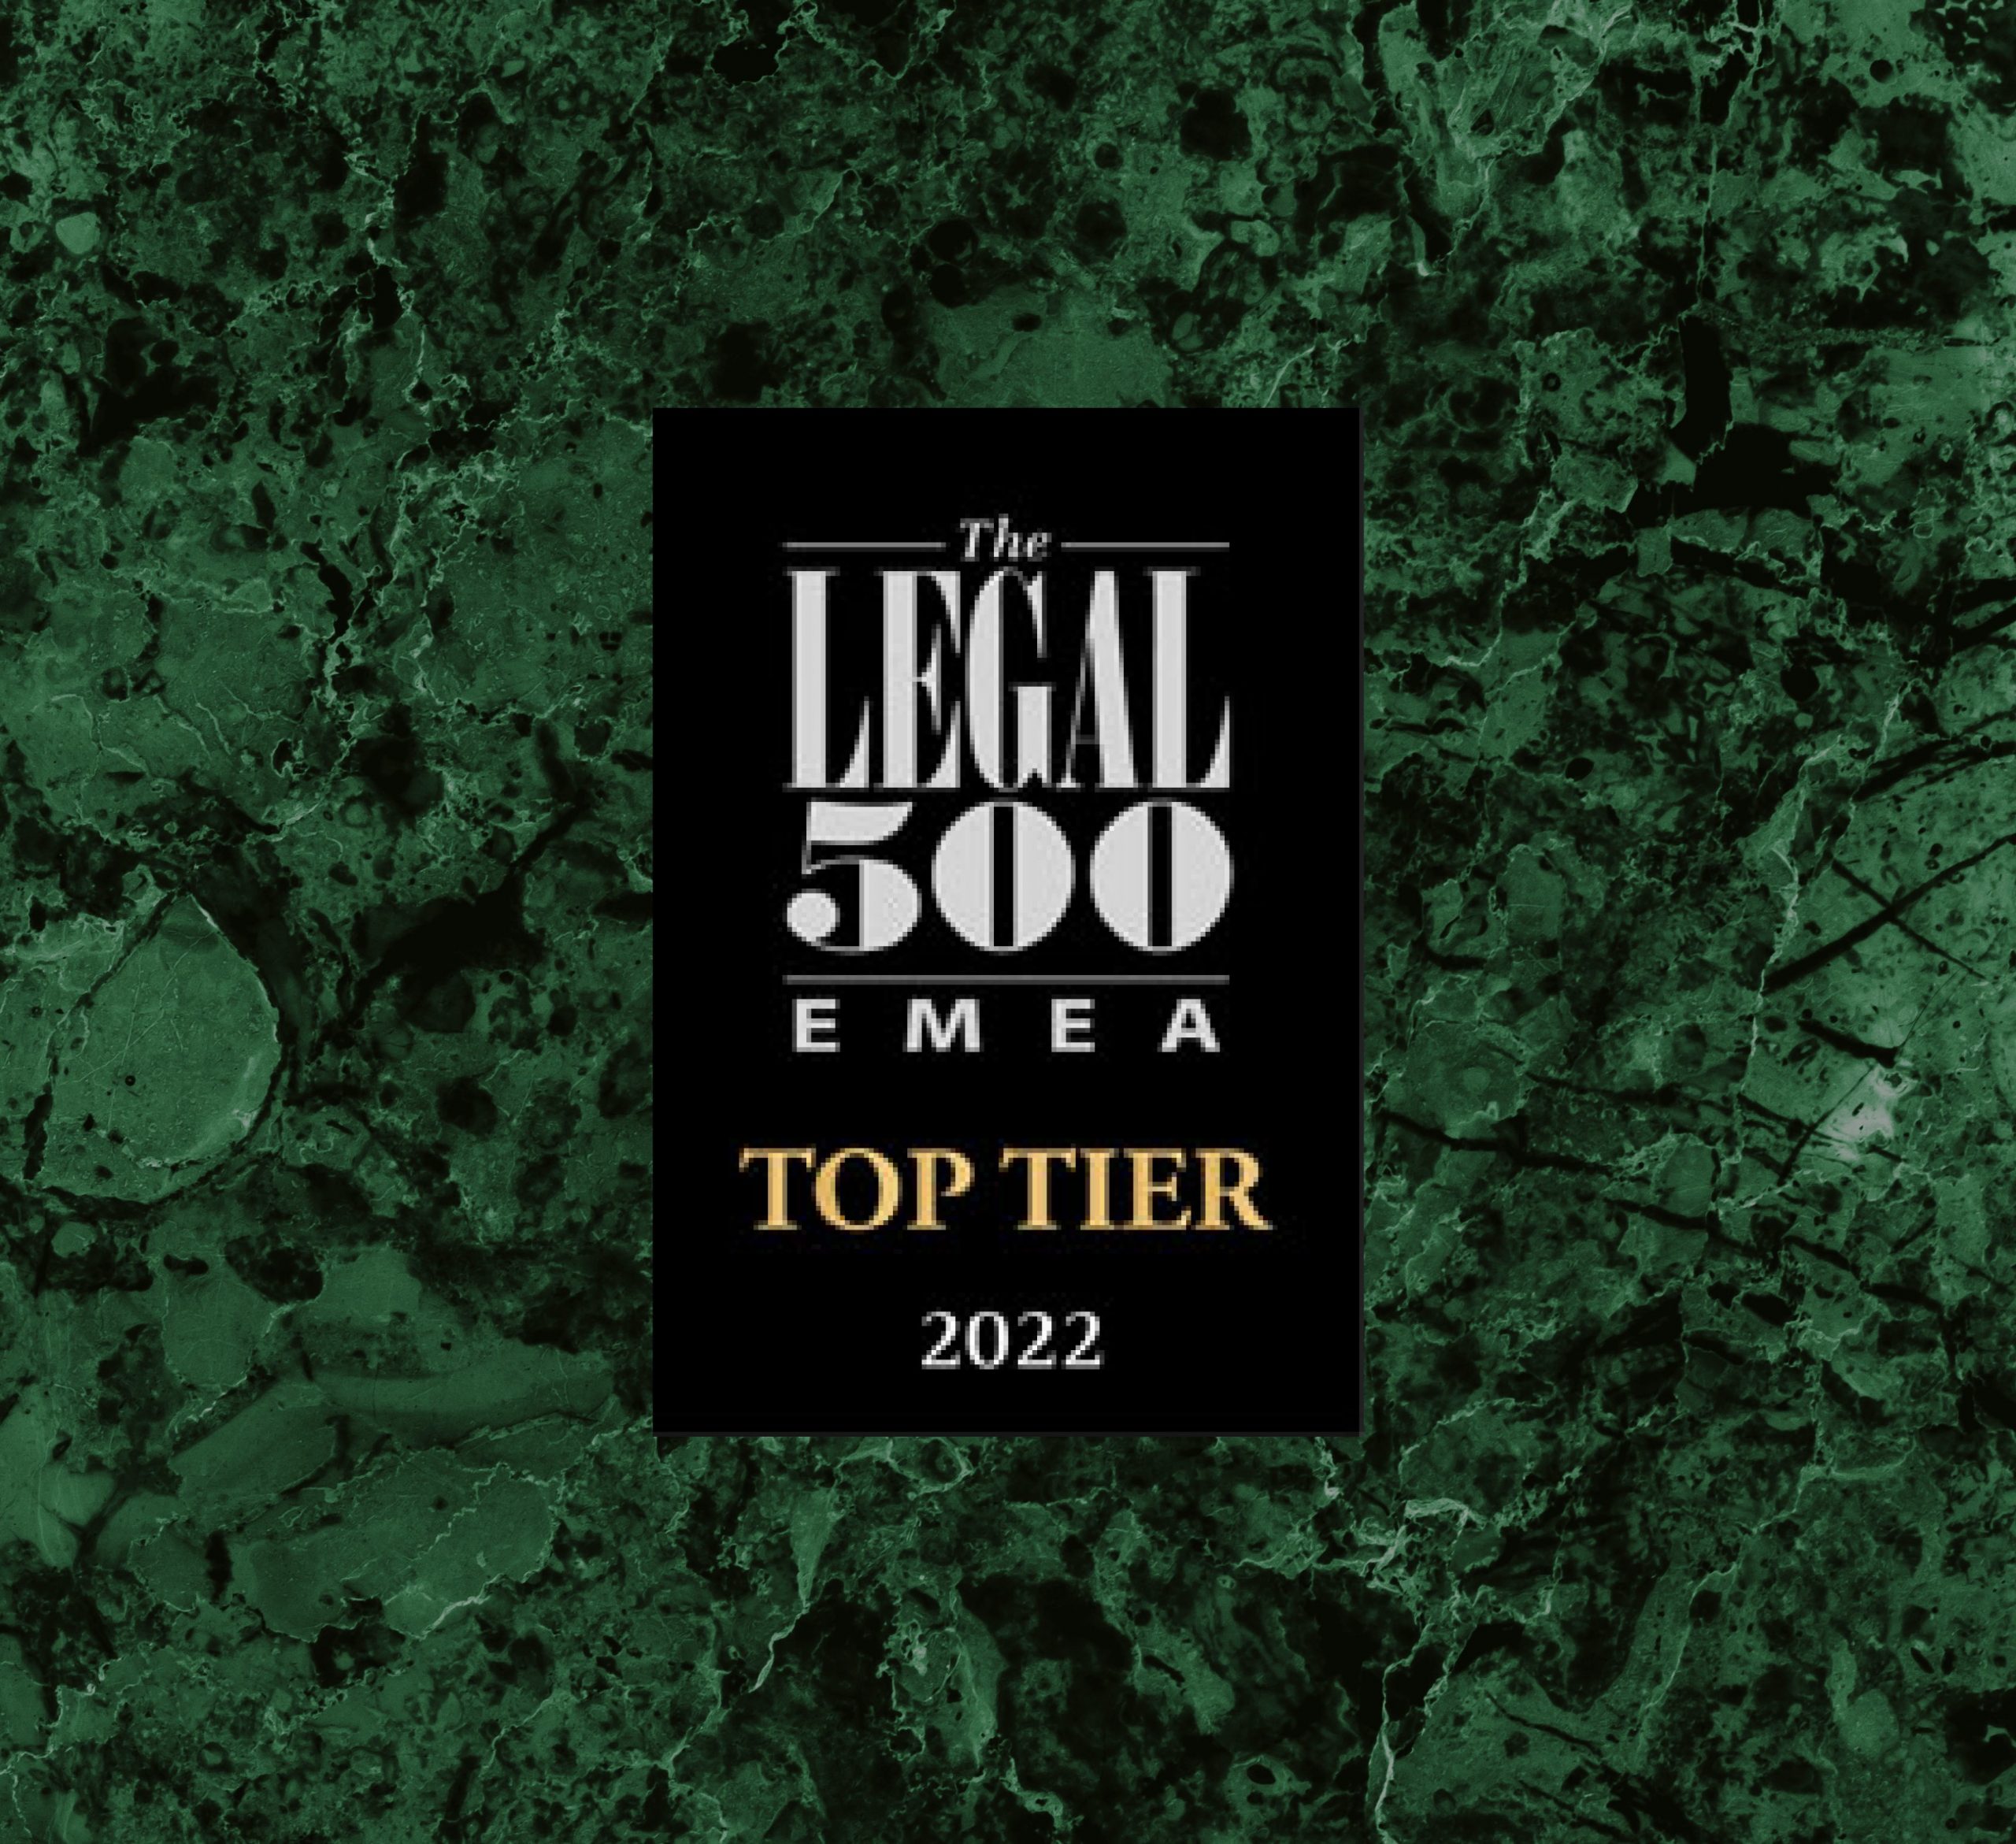 Top Tier Law Firm